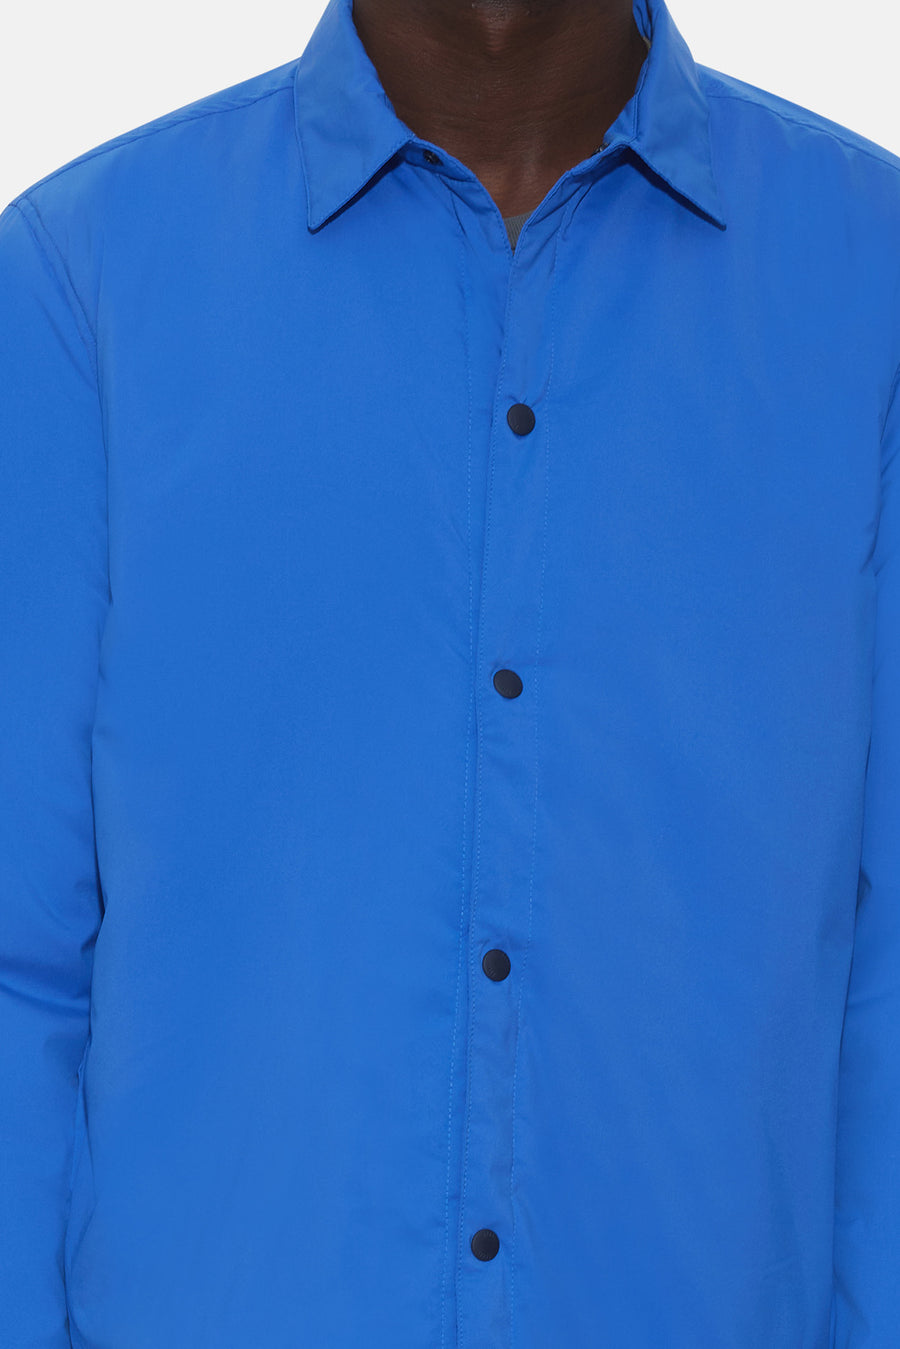 B&C Overshirt Blue